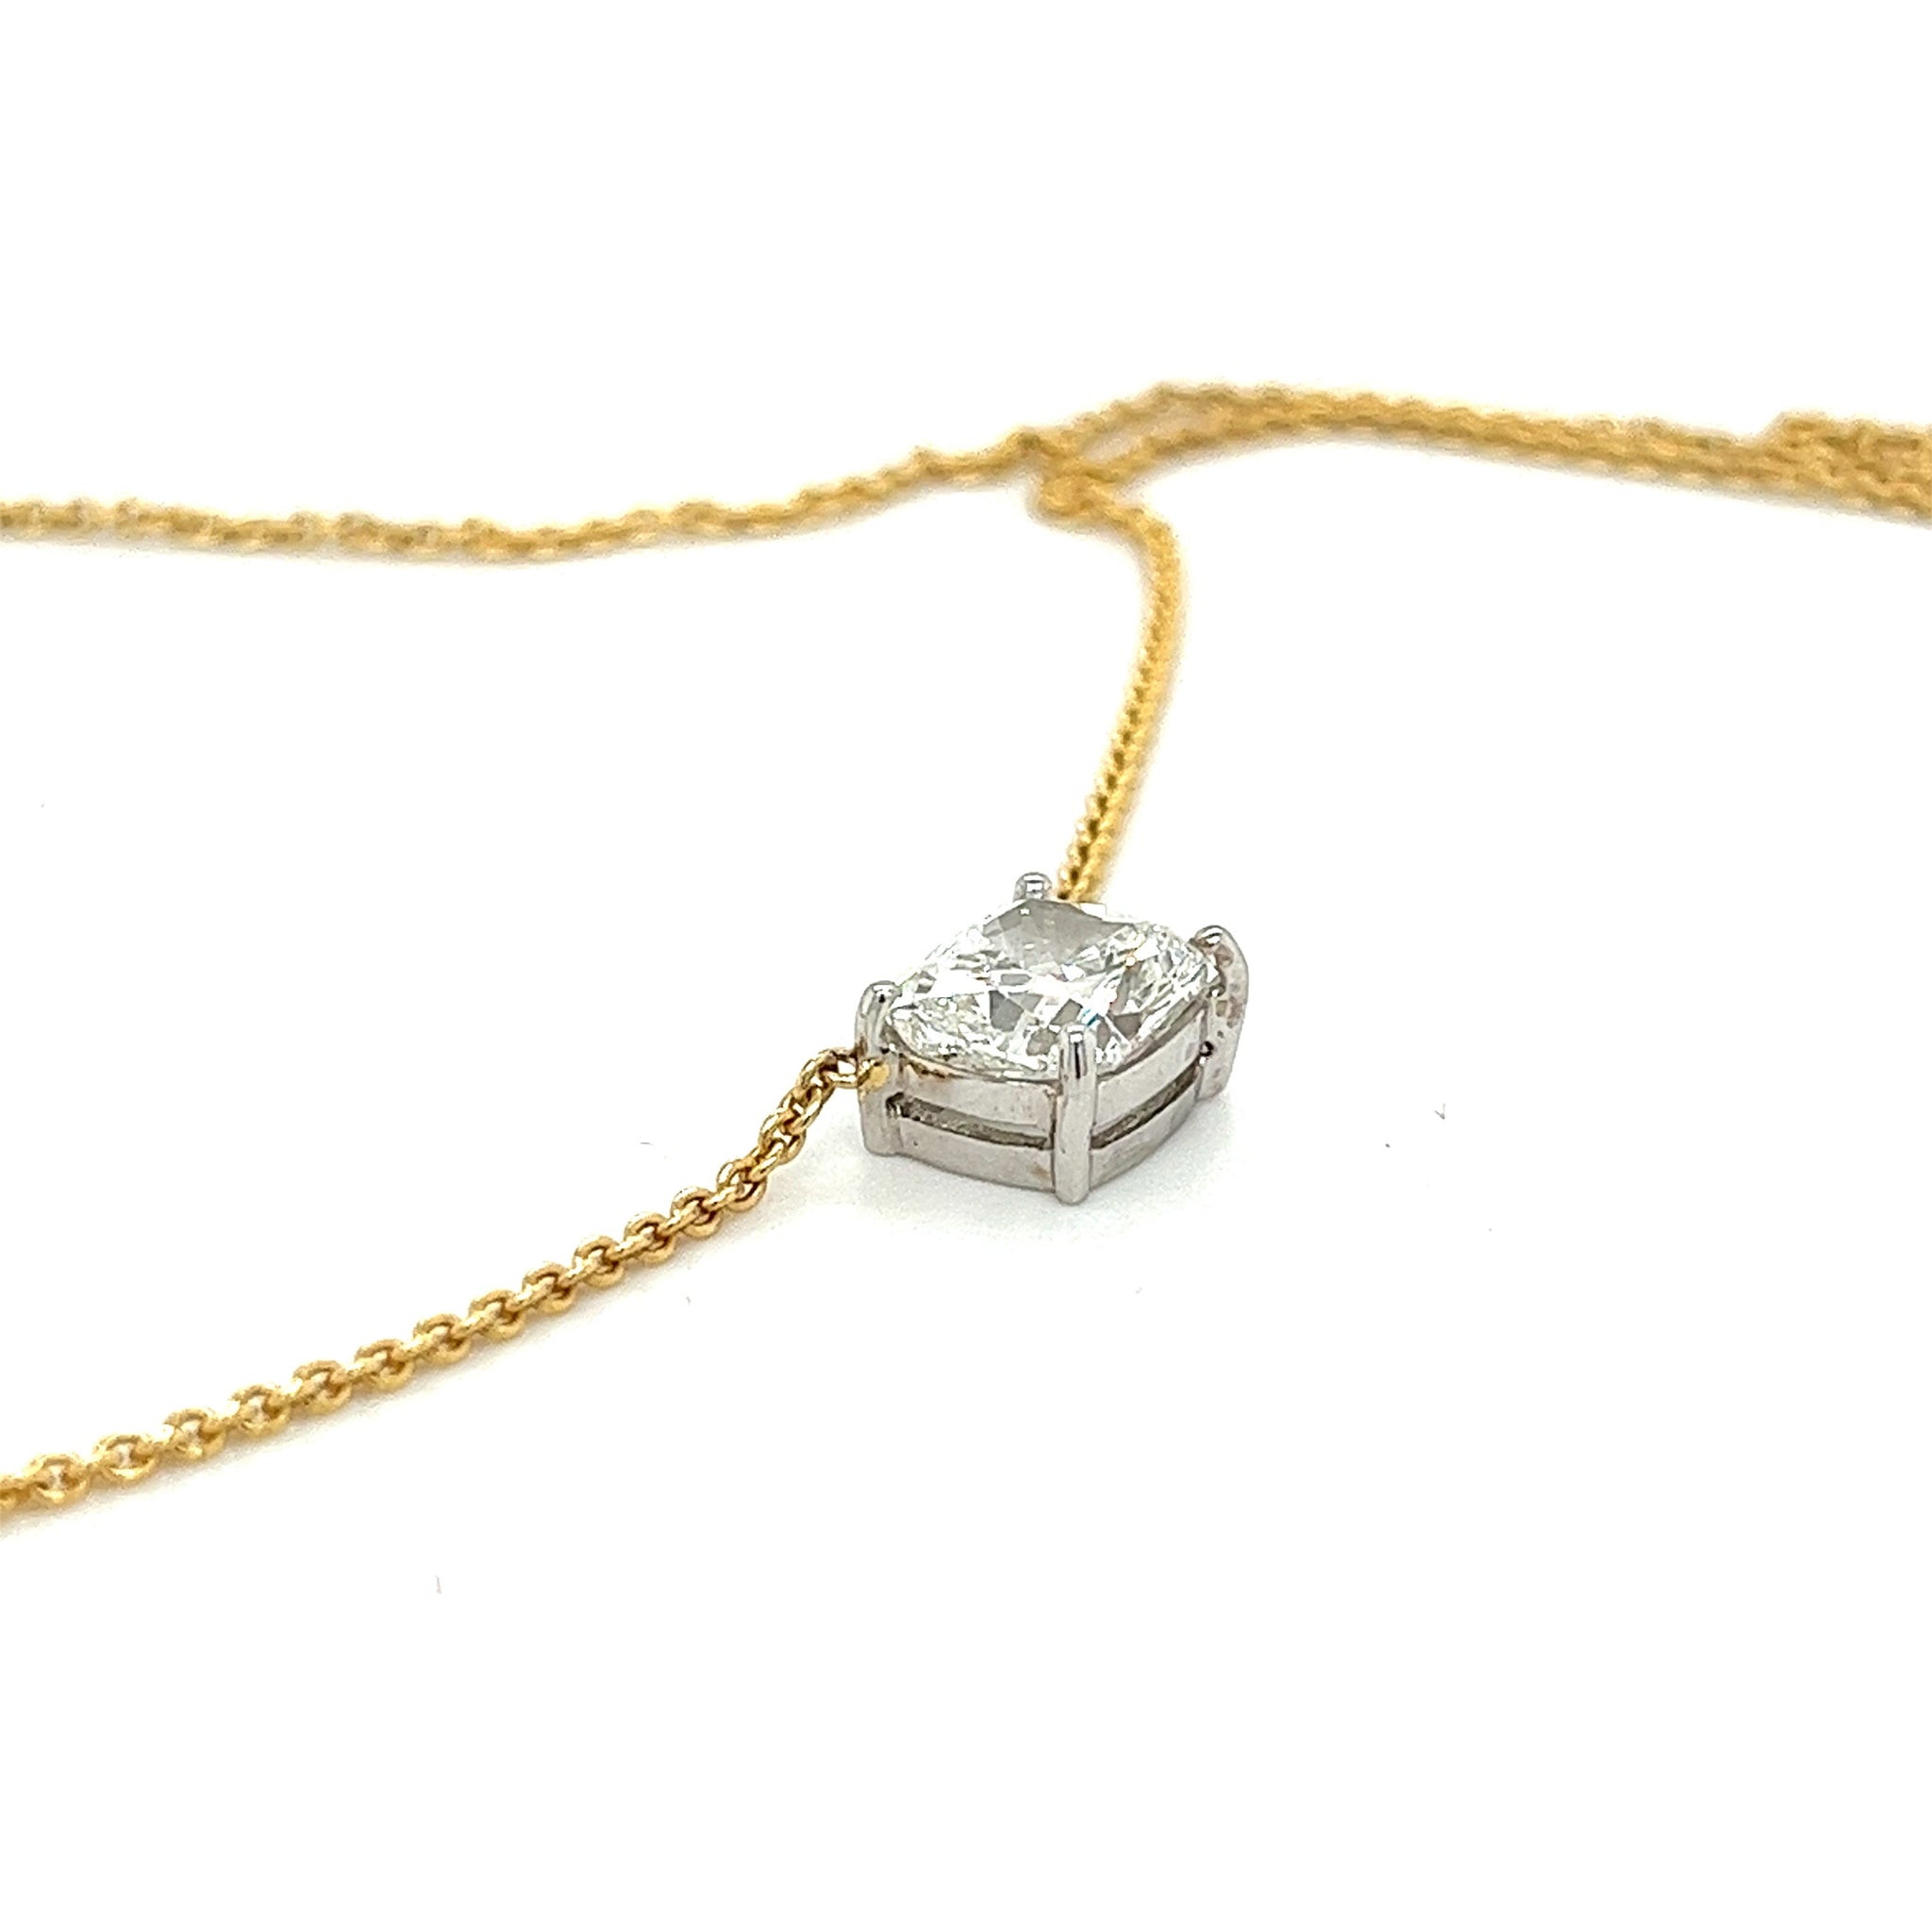 Lightbox 1-Carat Lab Grown Diamond Solitaire Necklace